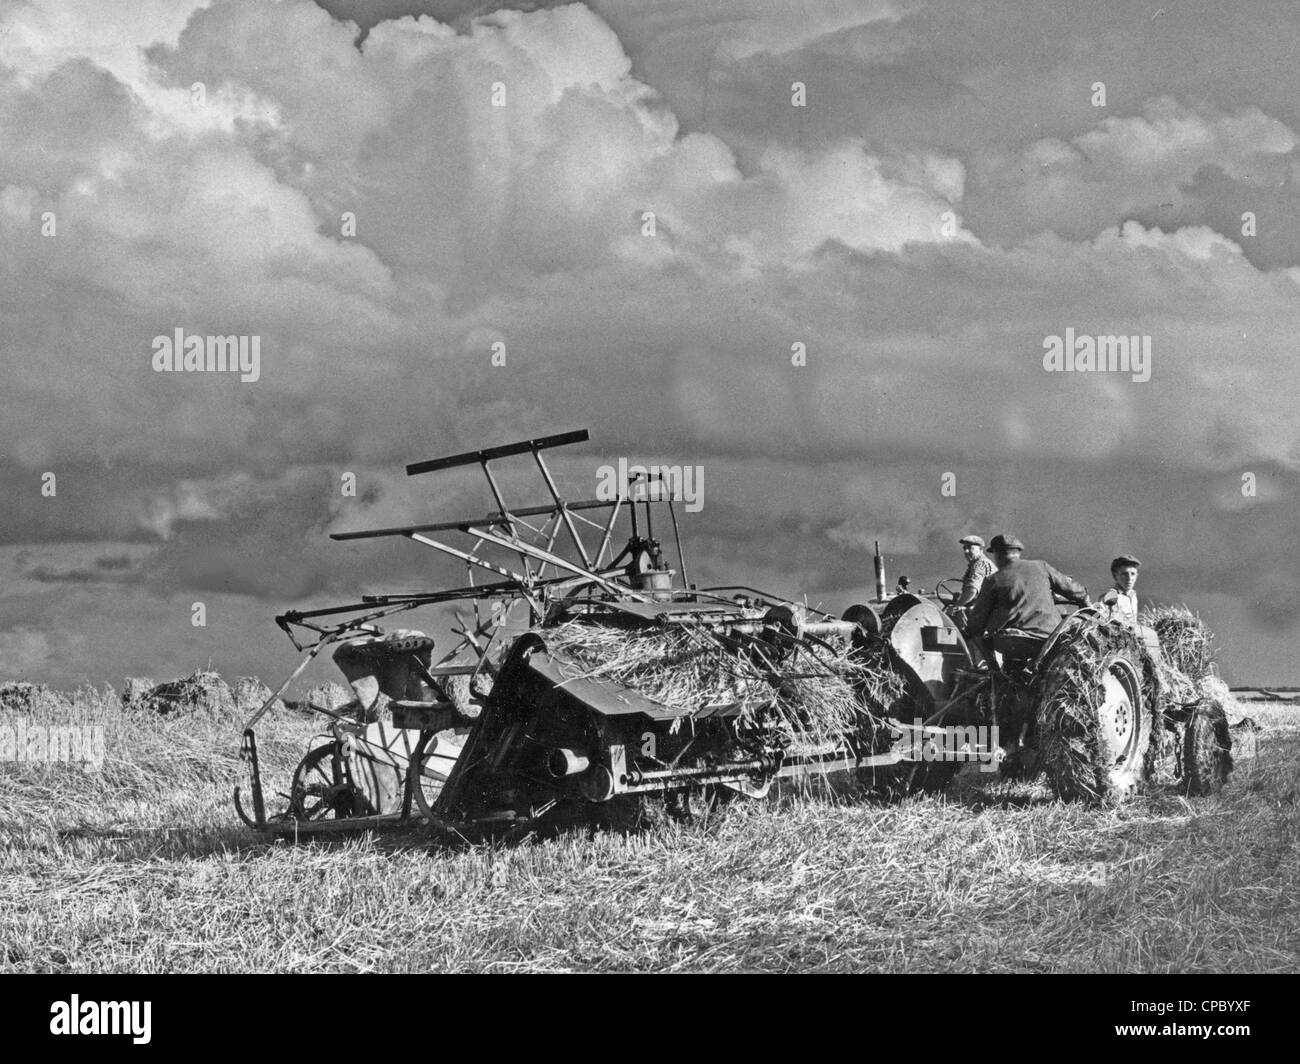 Harvesting near Bideford. A vintage farming scene from the 1950s Stock Photo